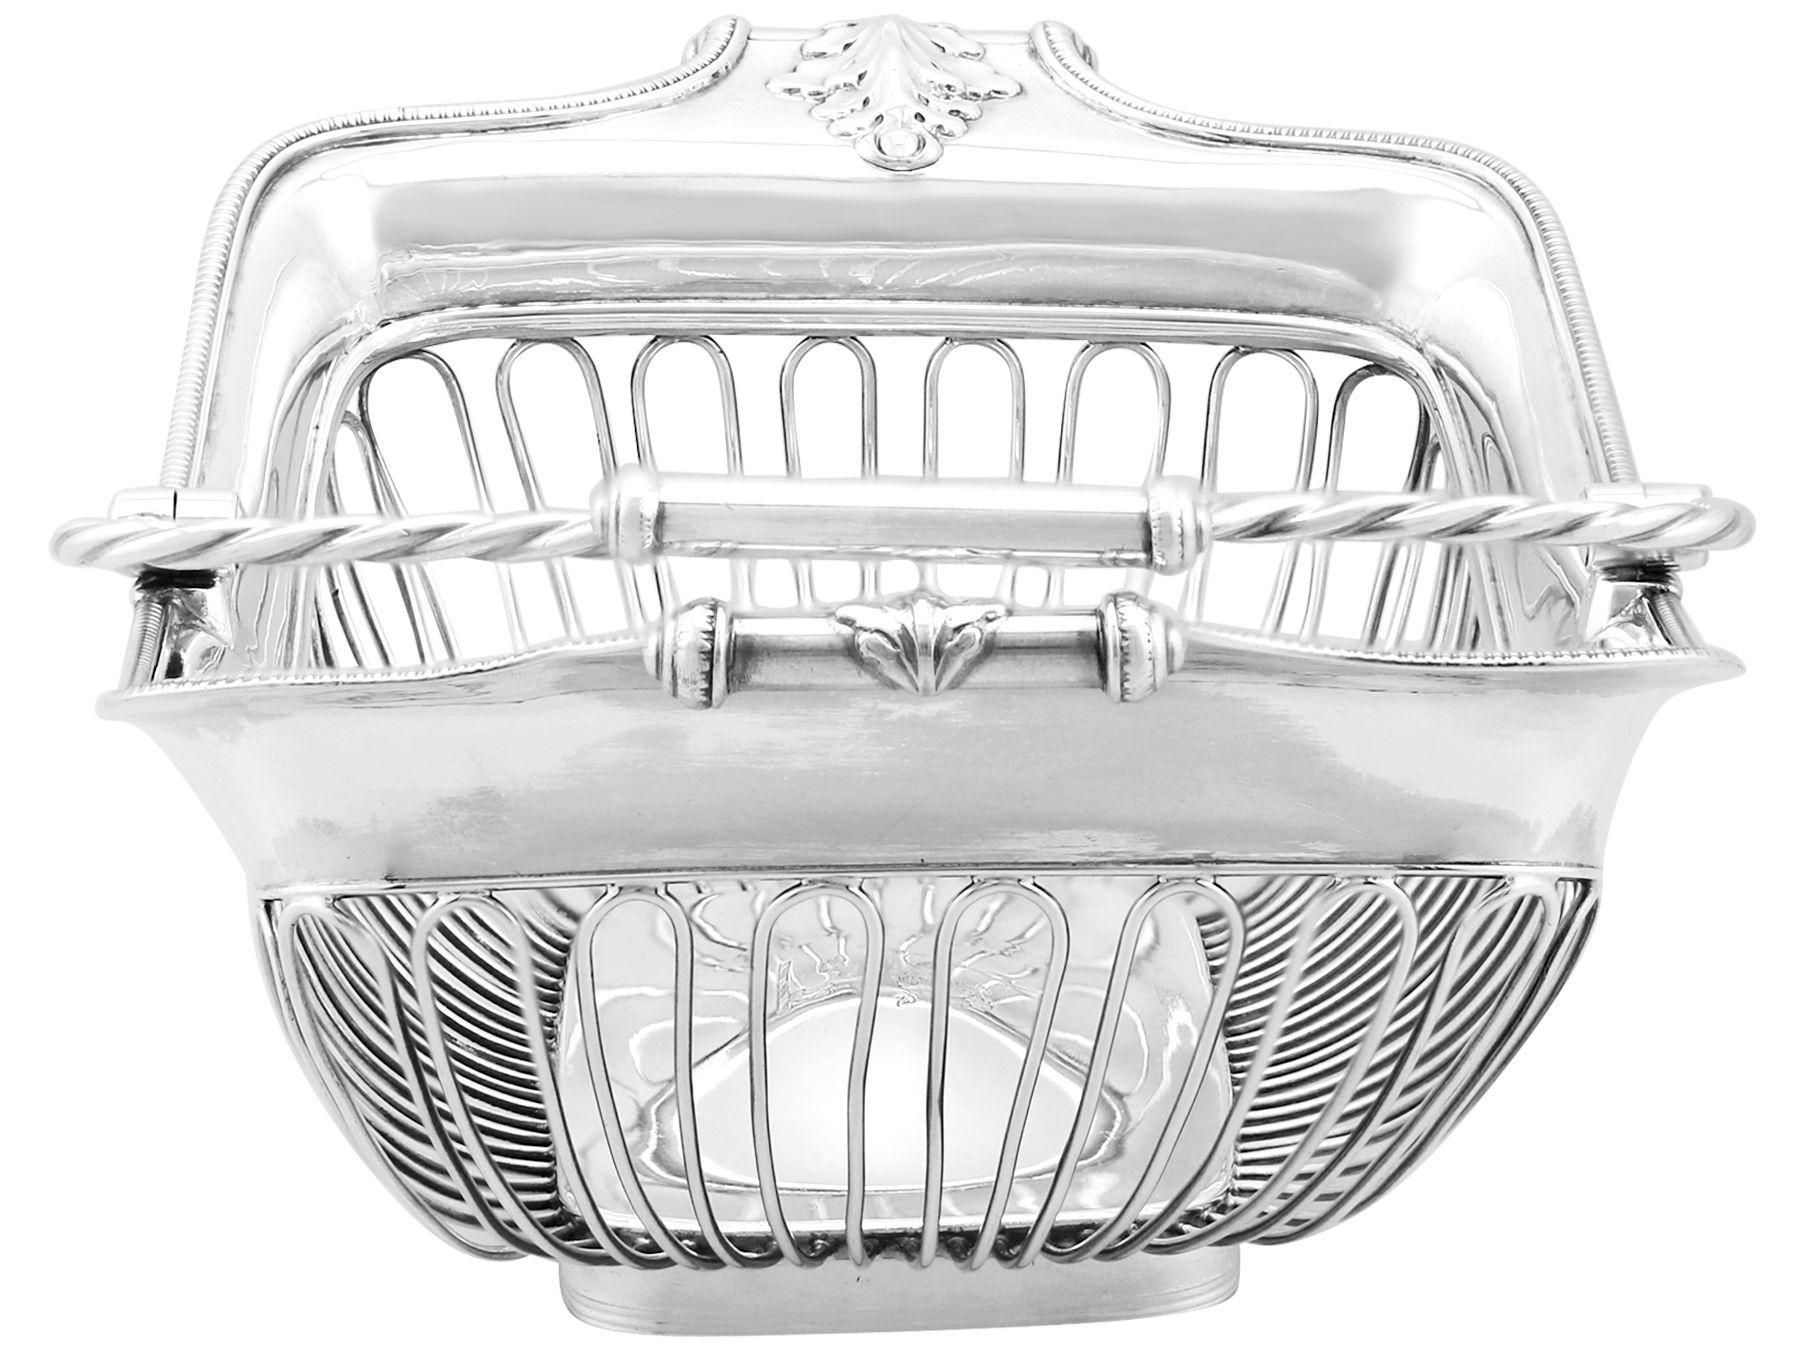 English John Winter & Co. 1806 Antique Sterling Silver Basket For Sale